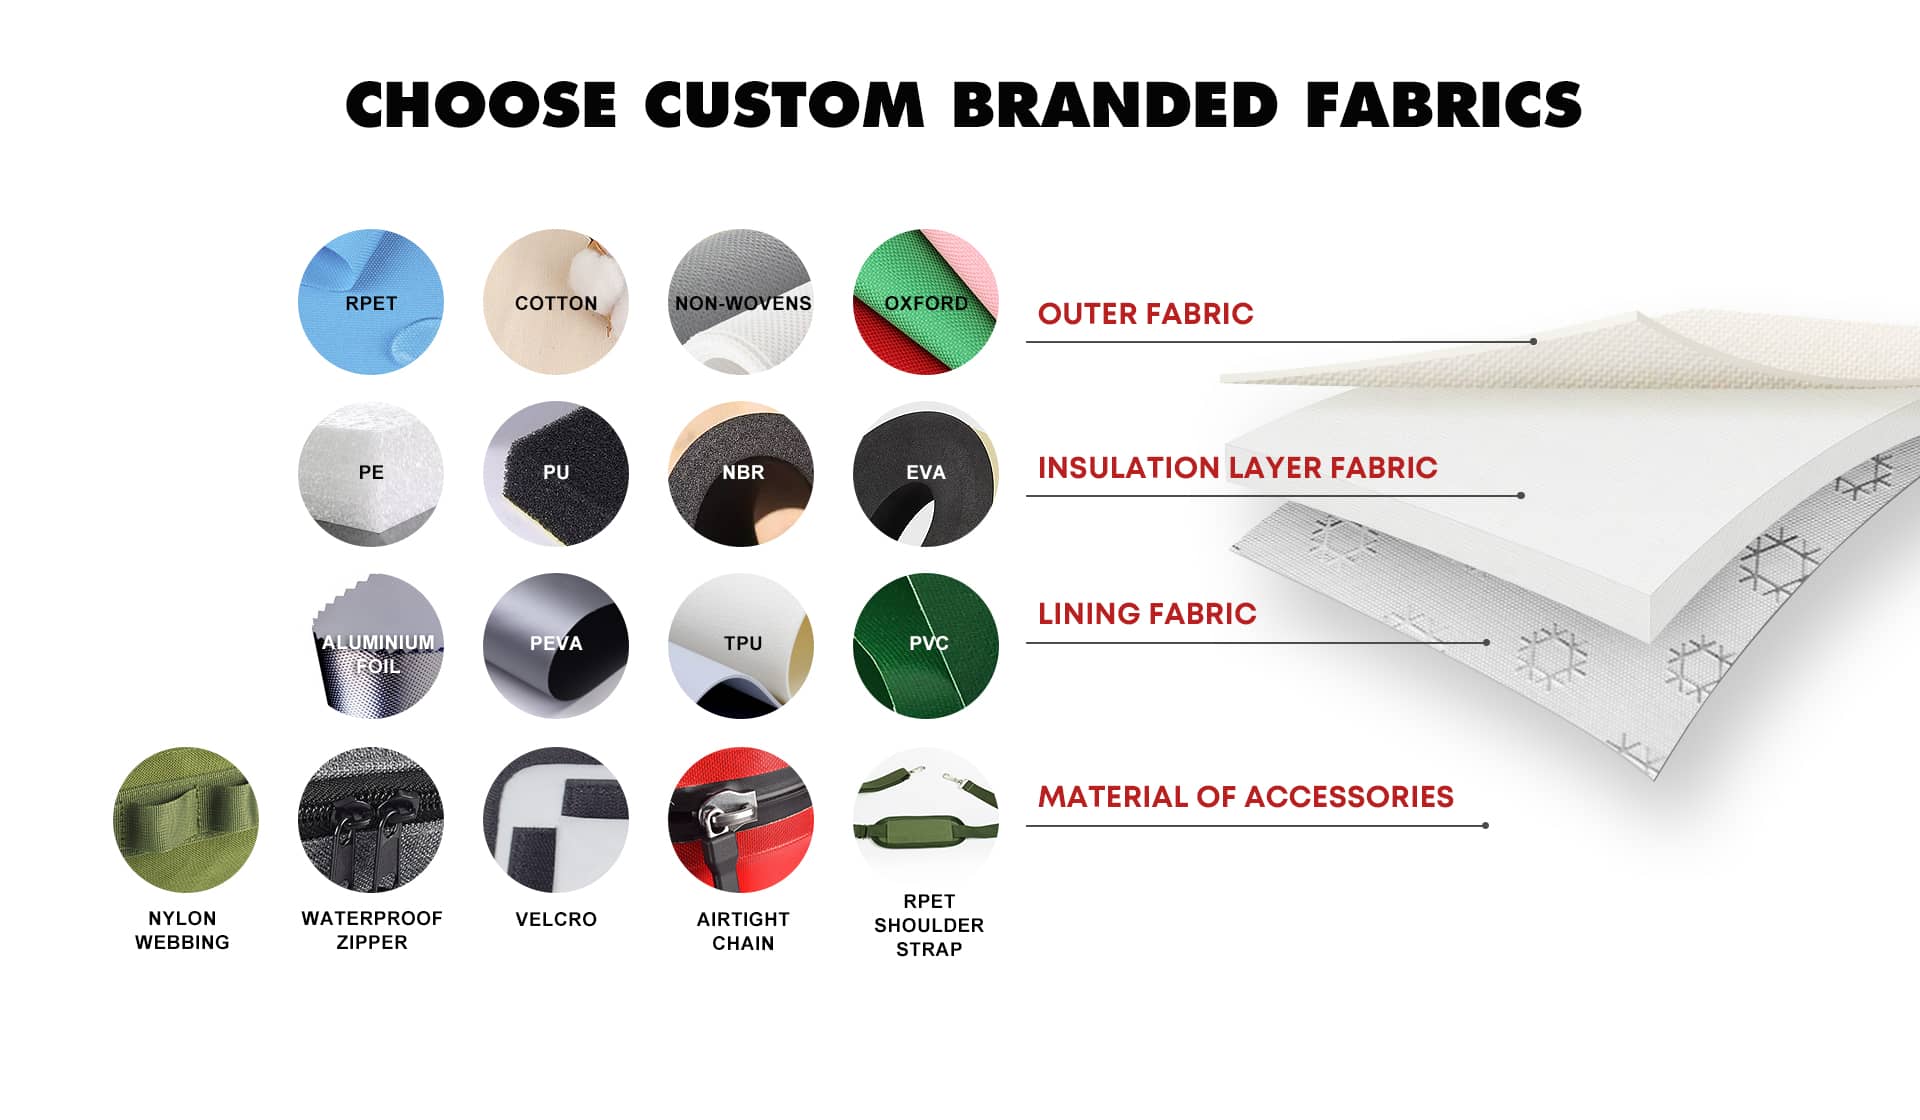 Choose custom branded fabrics